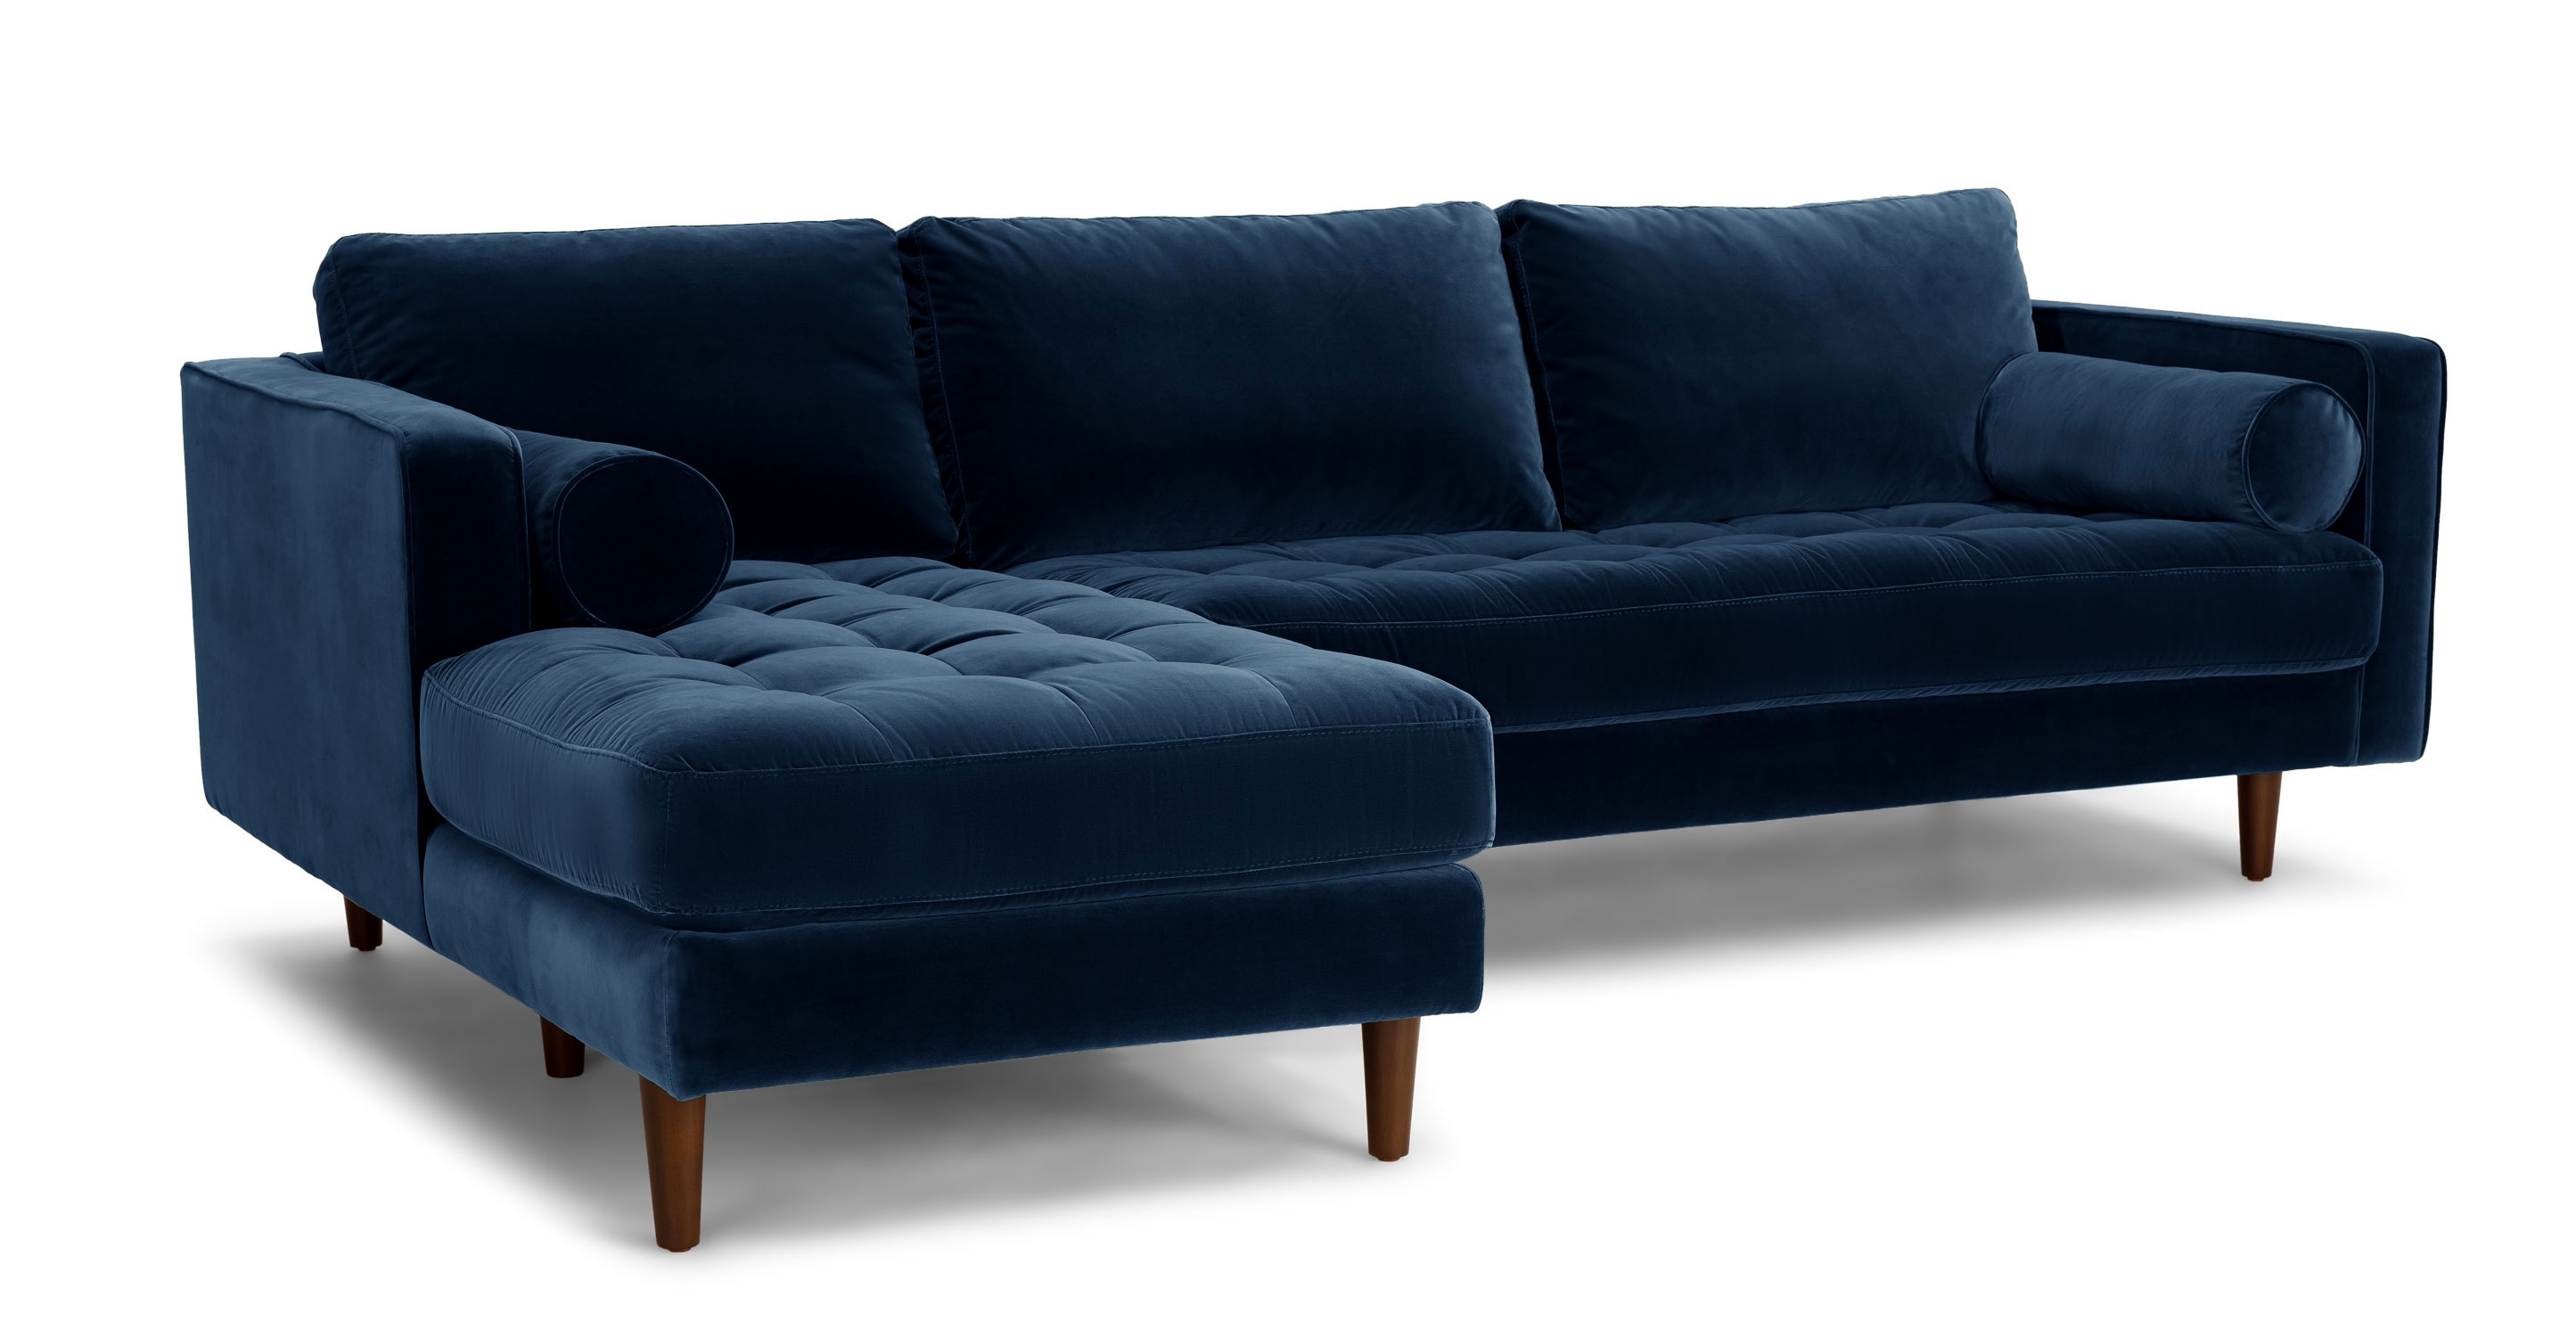 Sven Cascadia Blue Left Sectional Sofa - Image 1